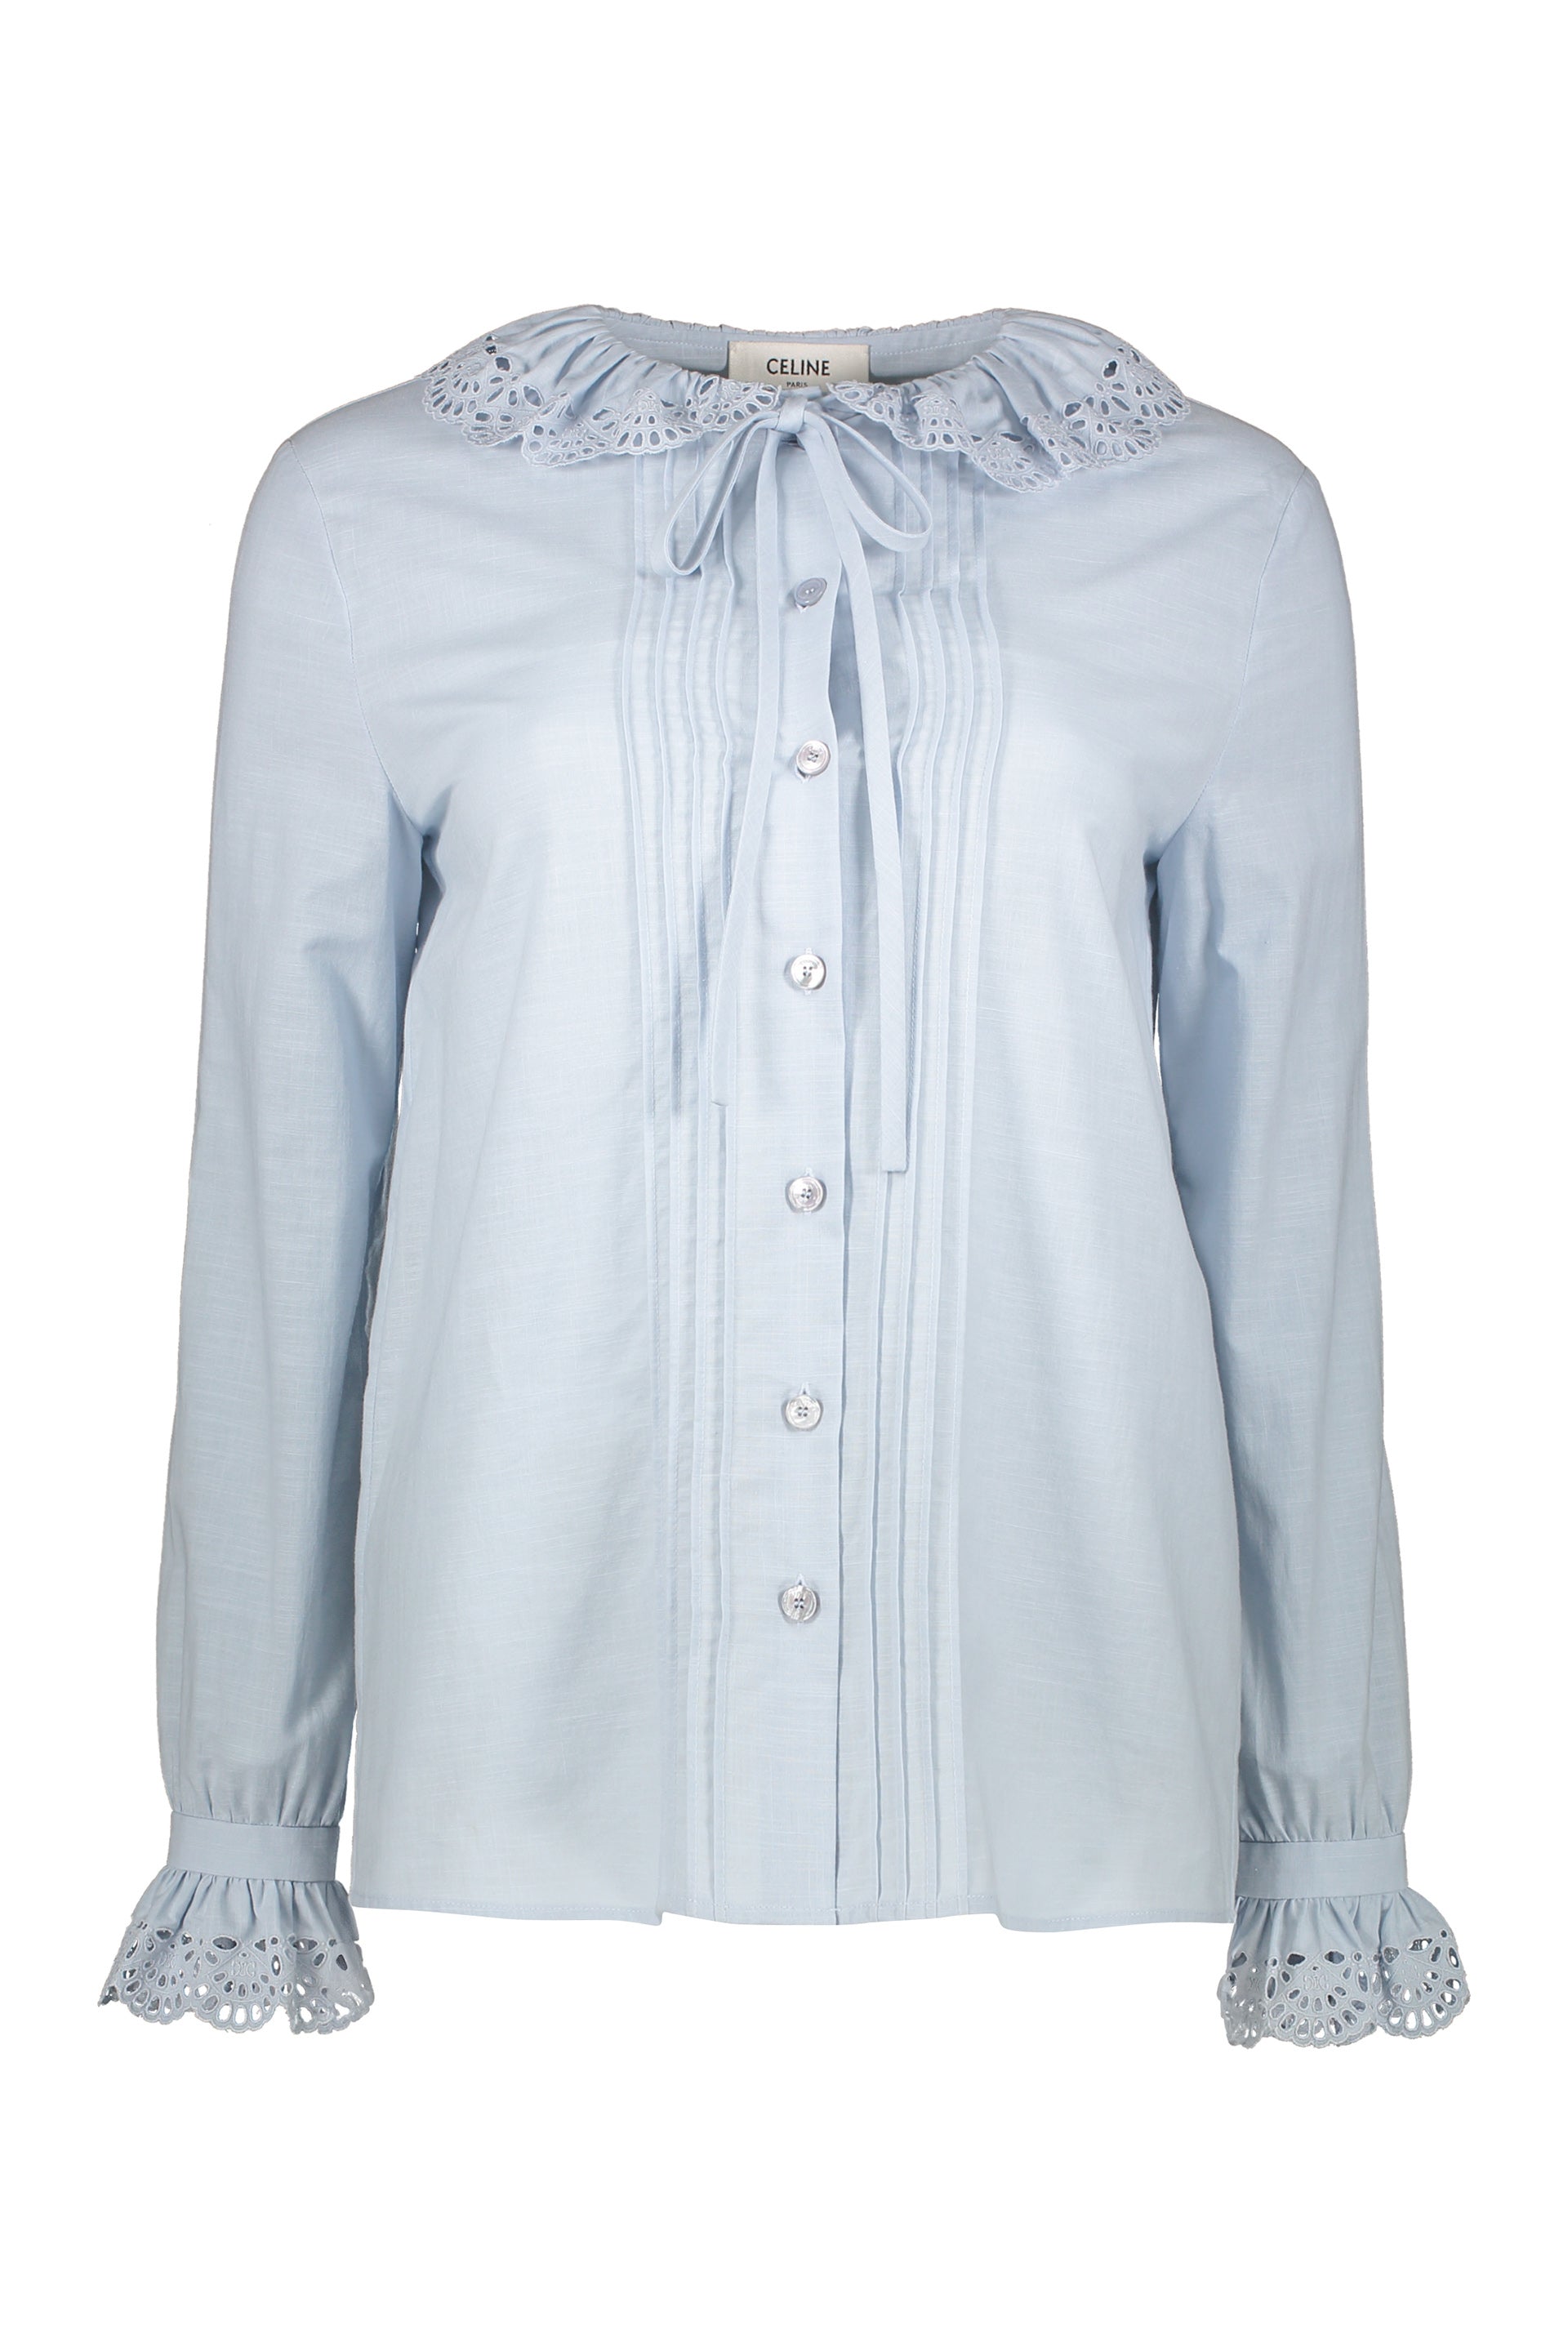 CELINE-OUTLET-SALE-Embroidered-cotton-blouse-Blusen-34-ARCHIVE-COLLECTION.jpg